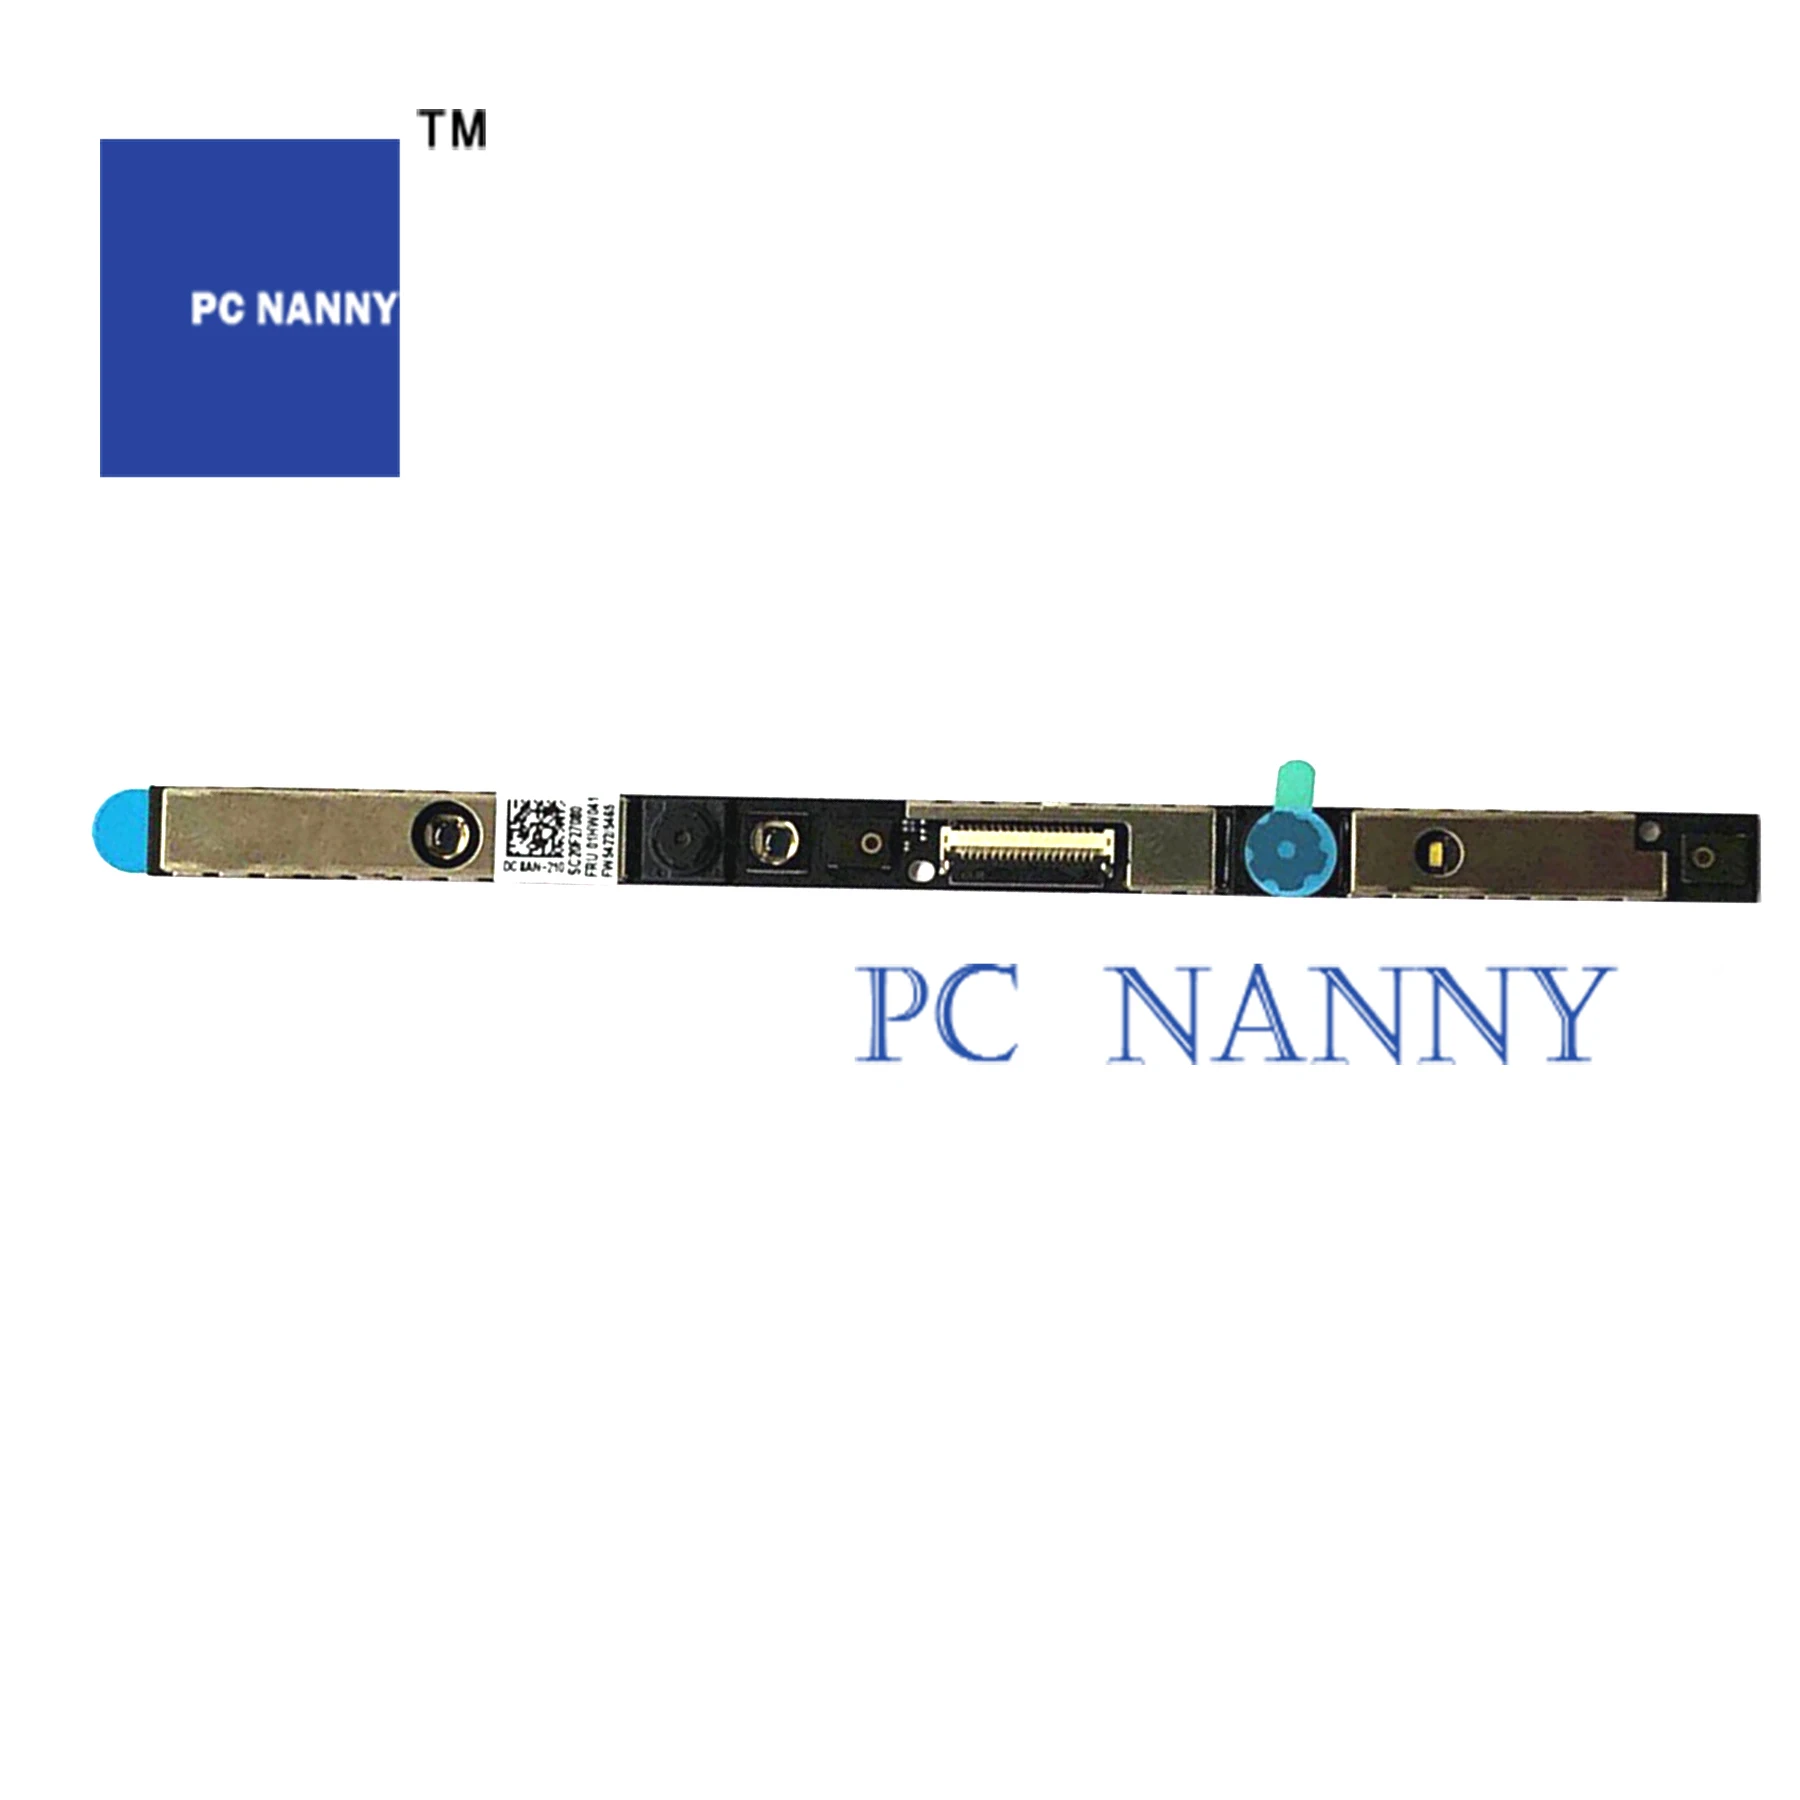 USB-плата PCNANNY для T480s фотокамера IR 01HW041 сканер отпечатков пальцев - купить по